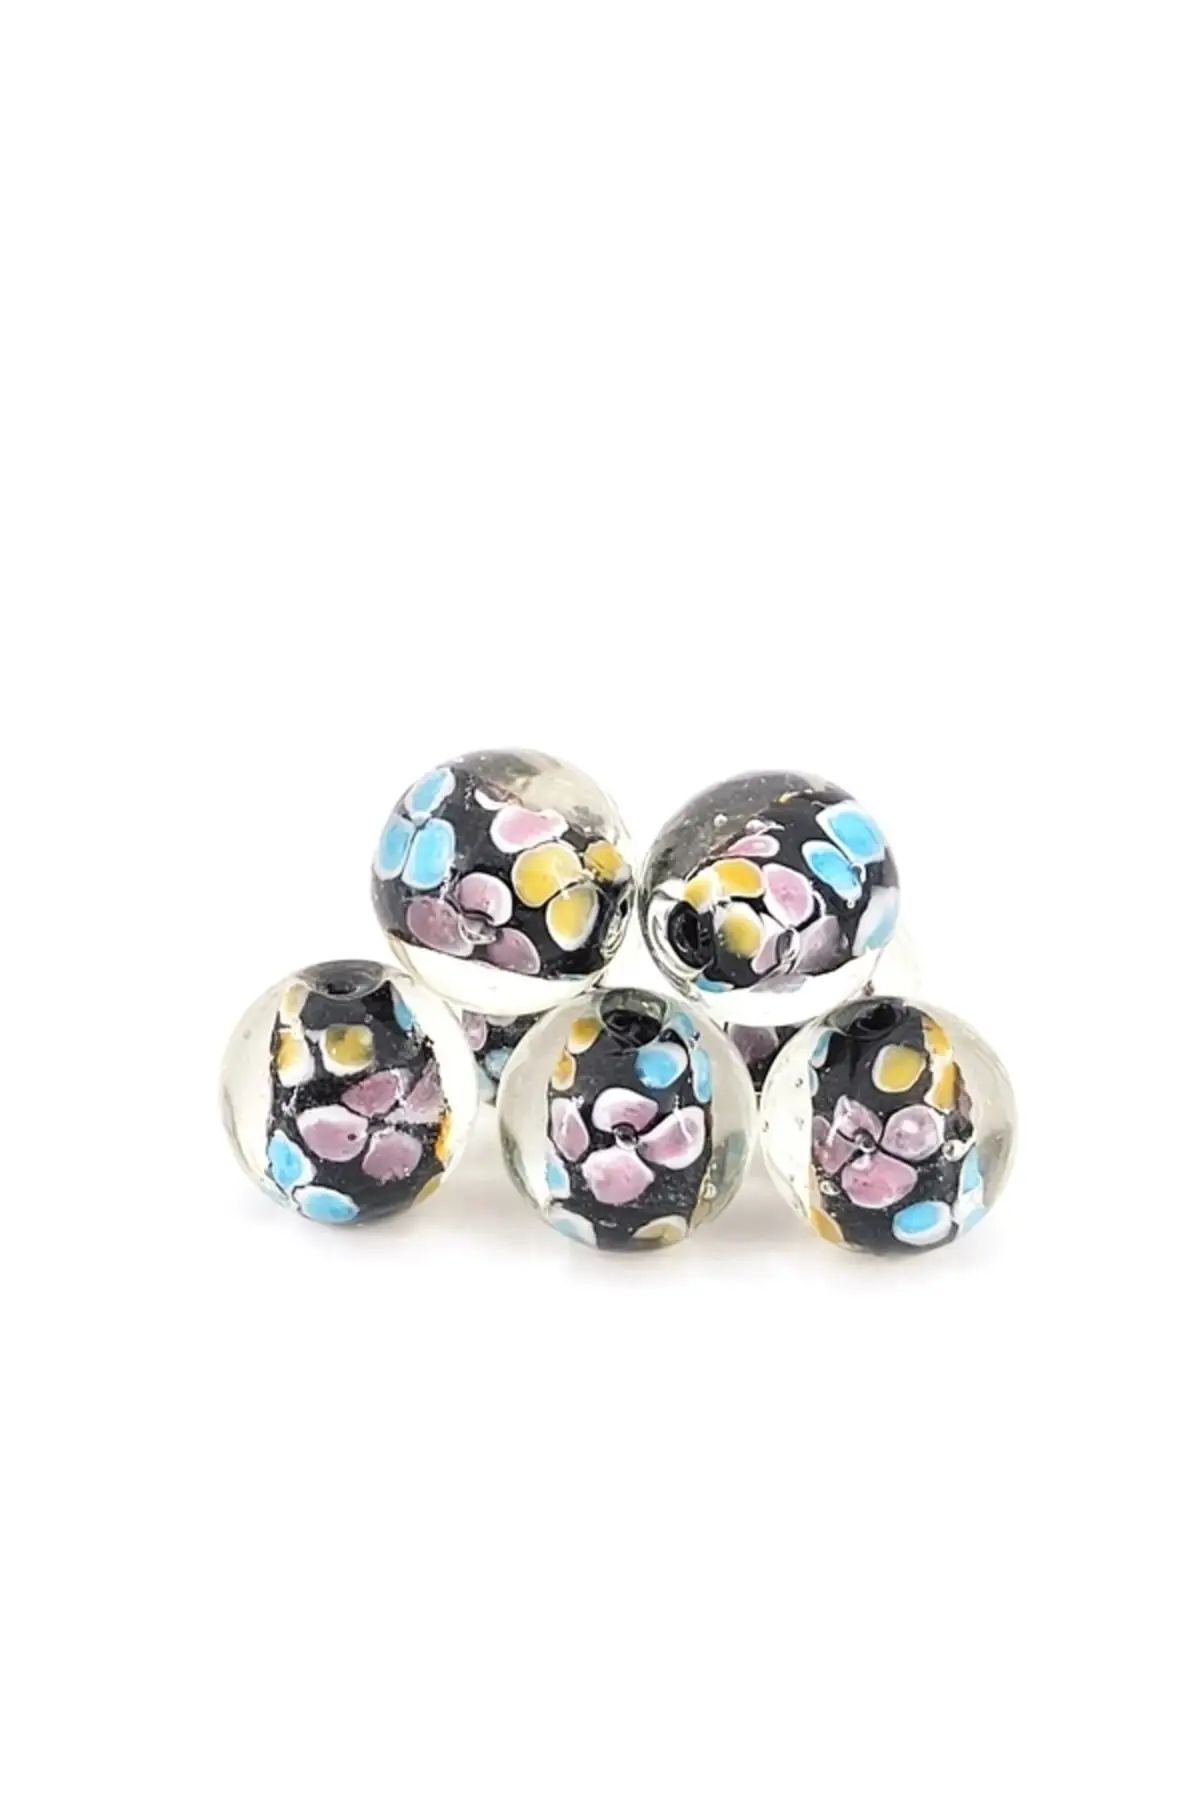 

Custom Made Murano Round Glass Beads Big Size 20 mm Black 3 Pcs Hobby Supplies & Entertainment Life